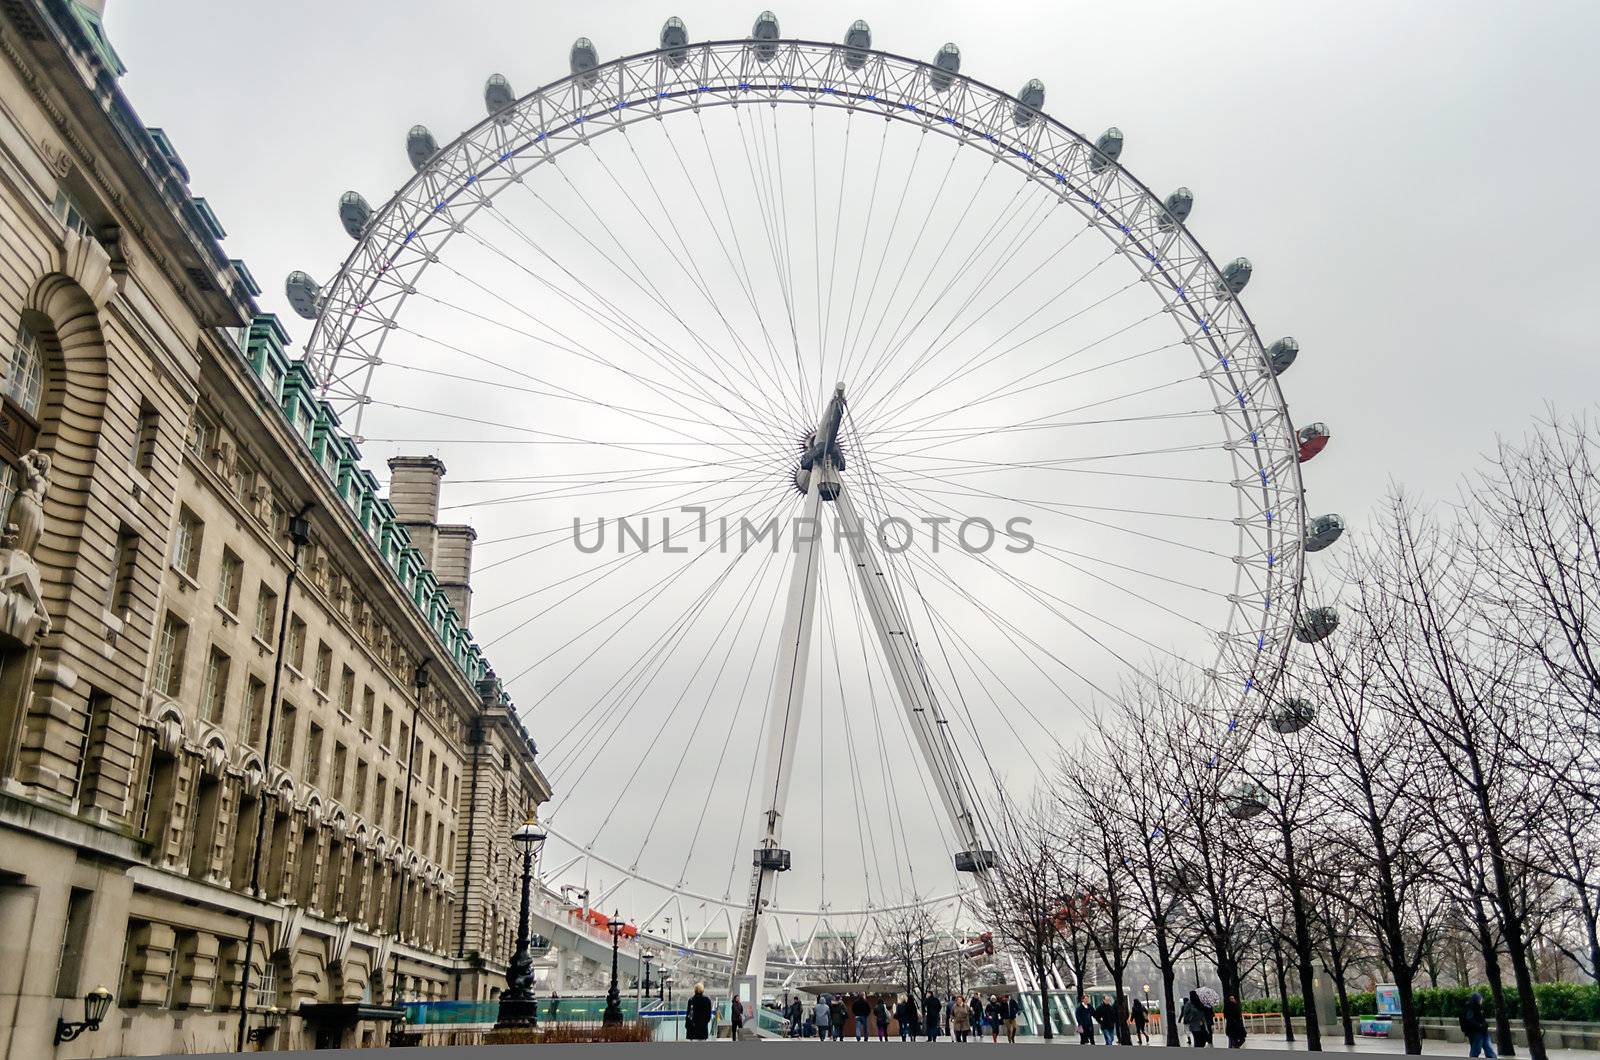 The London Eye Panoramic Wheel by marcorubino